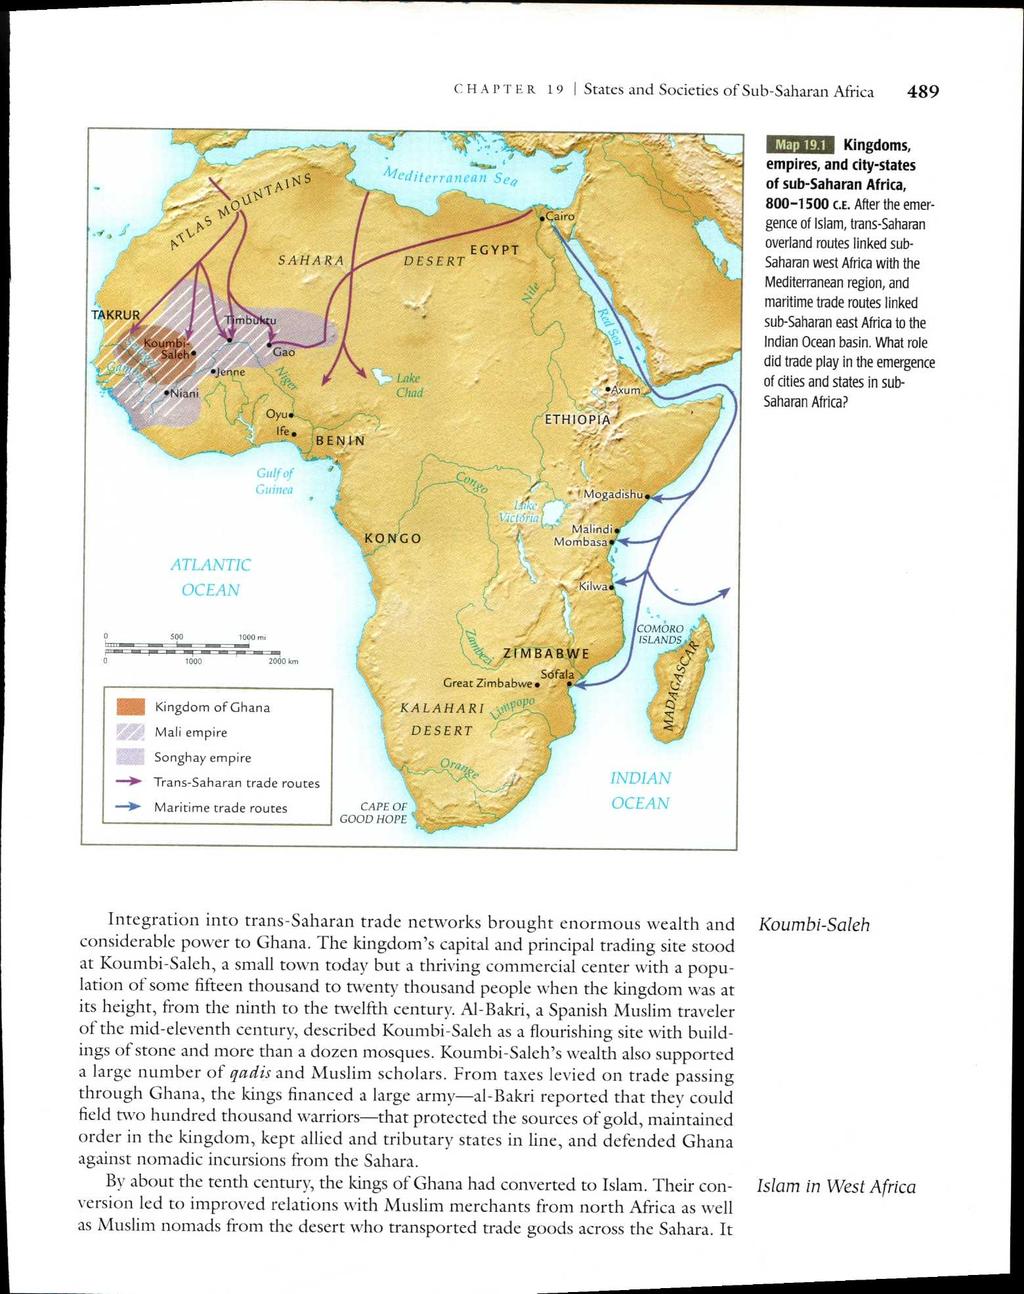 CHAPTER 19 I States and Societies of Sub-Saharan Africa 489 TAKRUR.Jenne SAHARA DESERT Gao Oyu Ife BENIN EGYPT Cairo ETHIOPIA Axum Map 19.